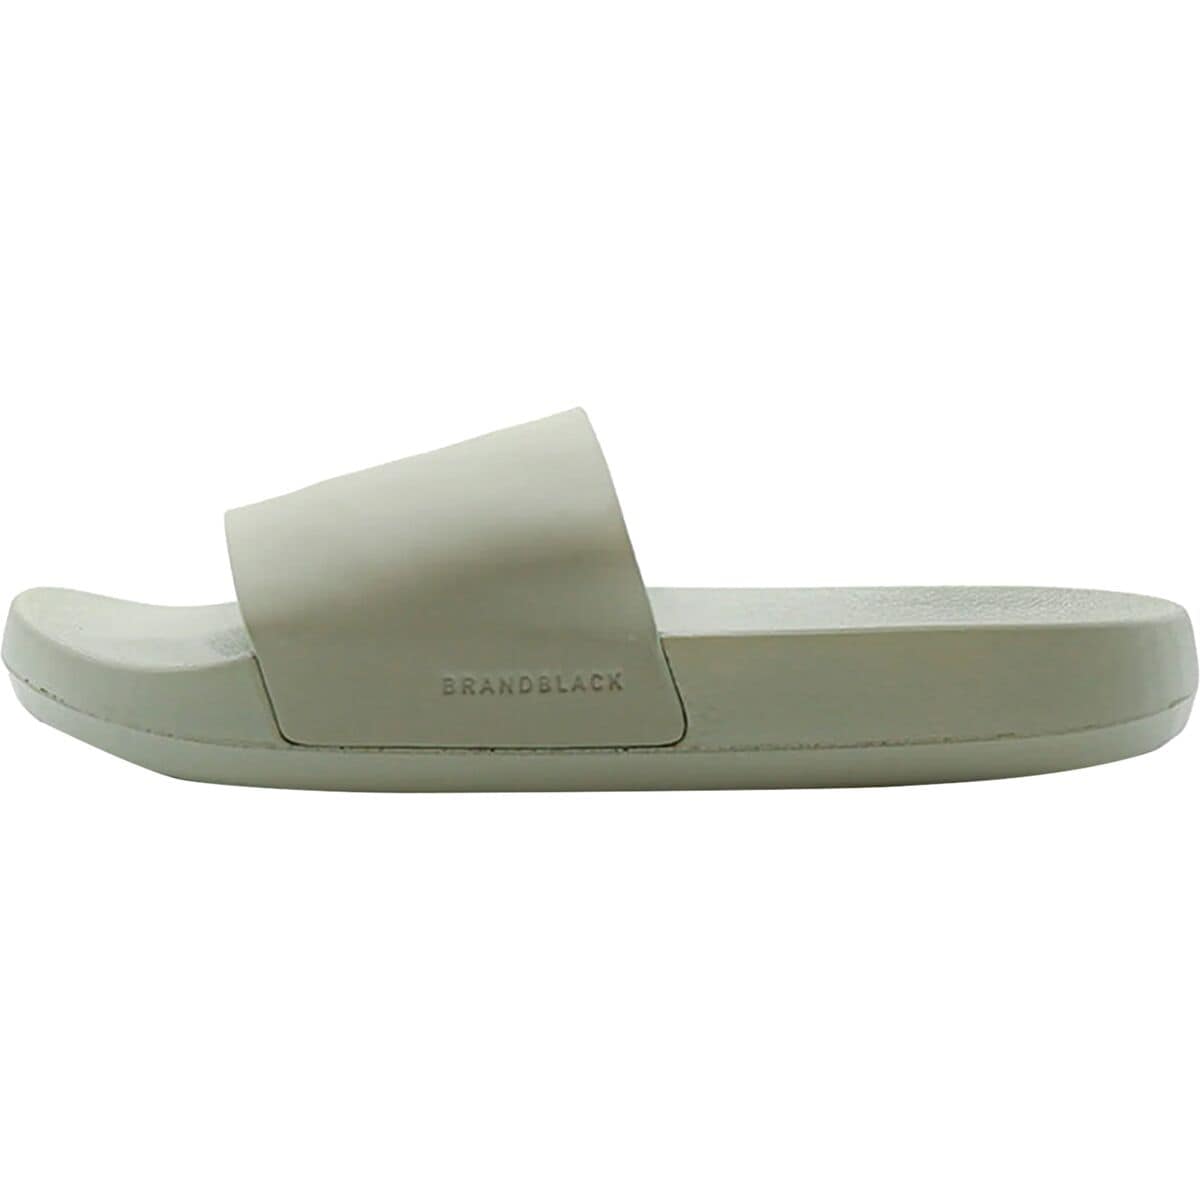 Brandblack Kashiba-Lux Slide Sandal - Men's